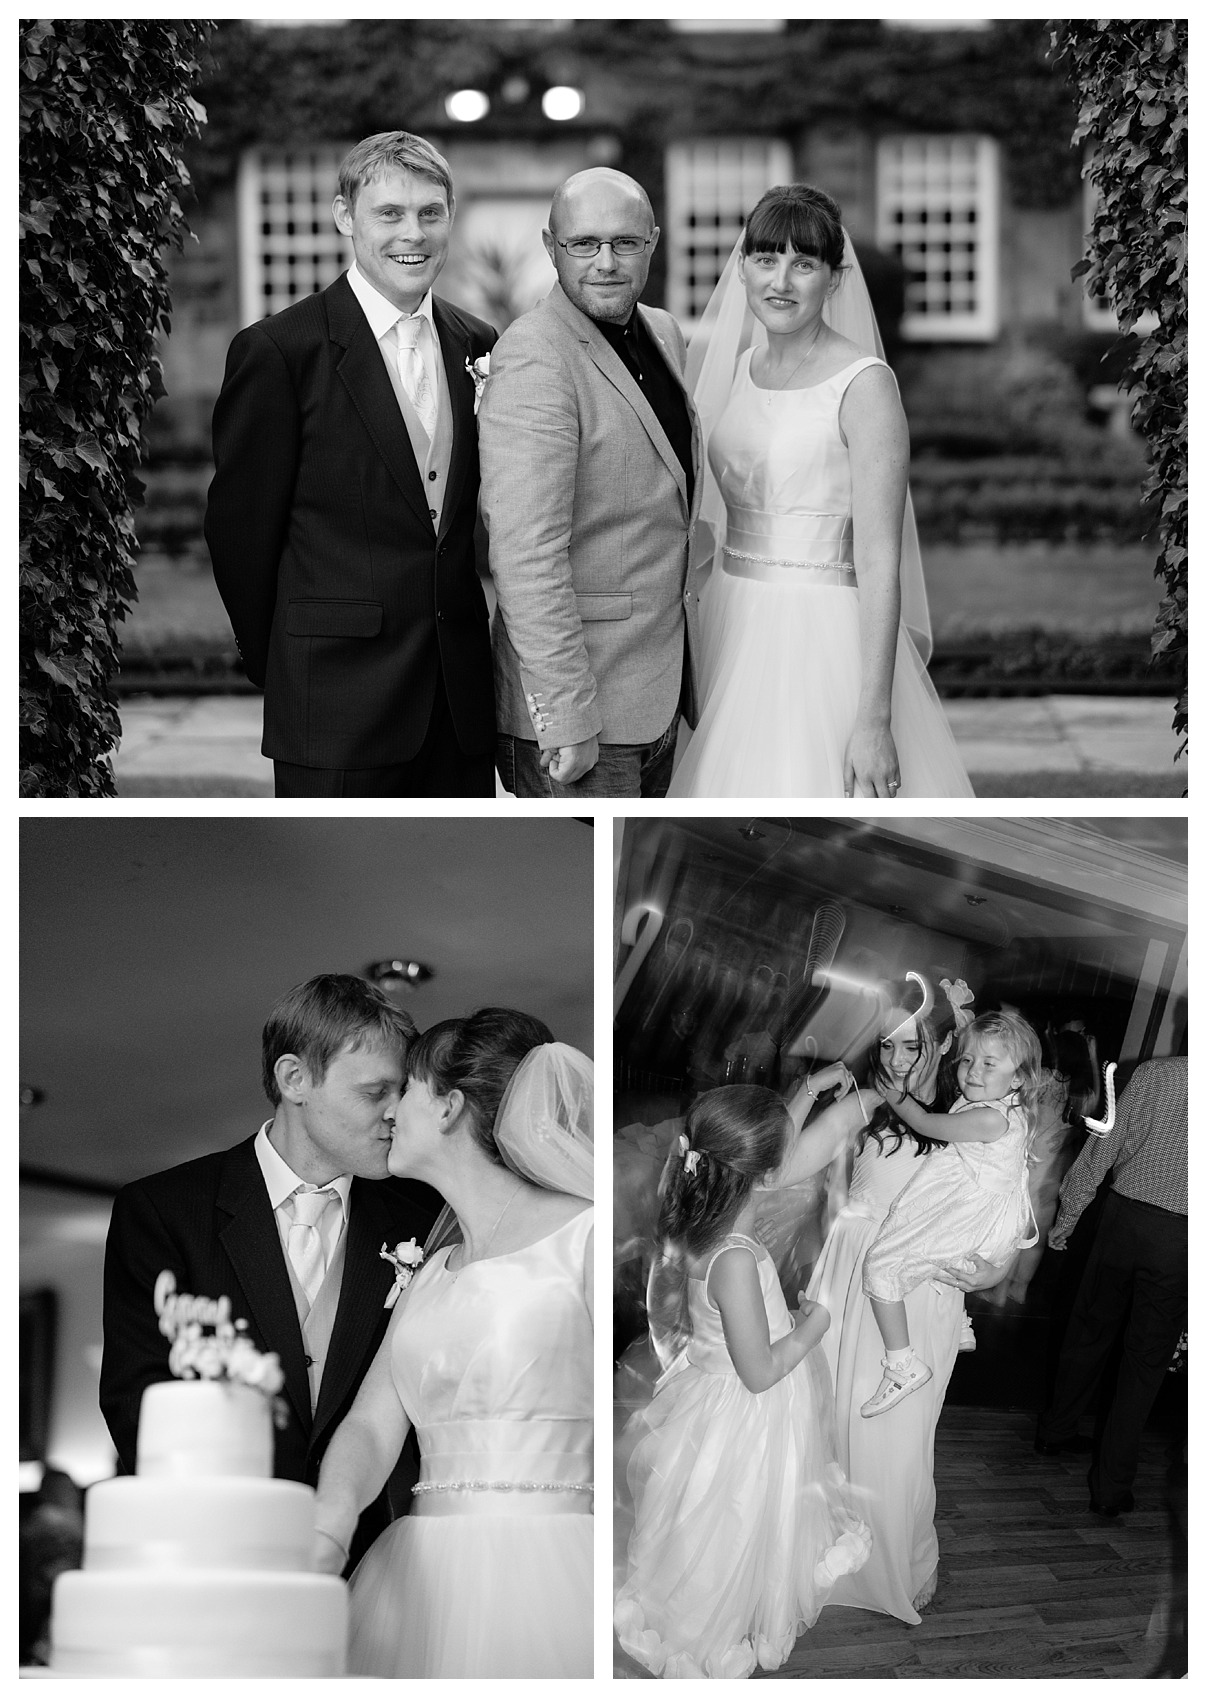 Dixie Heart FM at Whitley Hall Hotel wedding by Sheffield wedding photographer Chris Loneragan 081700024